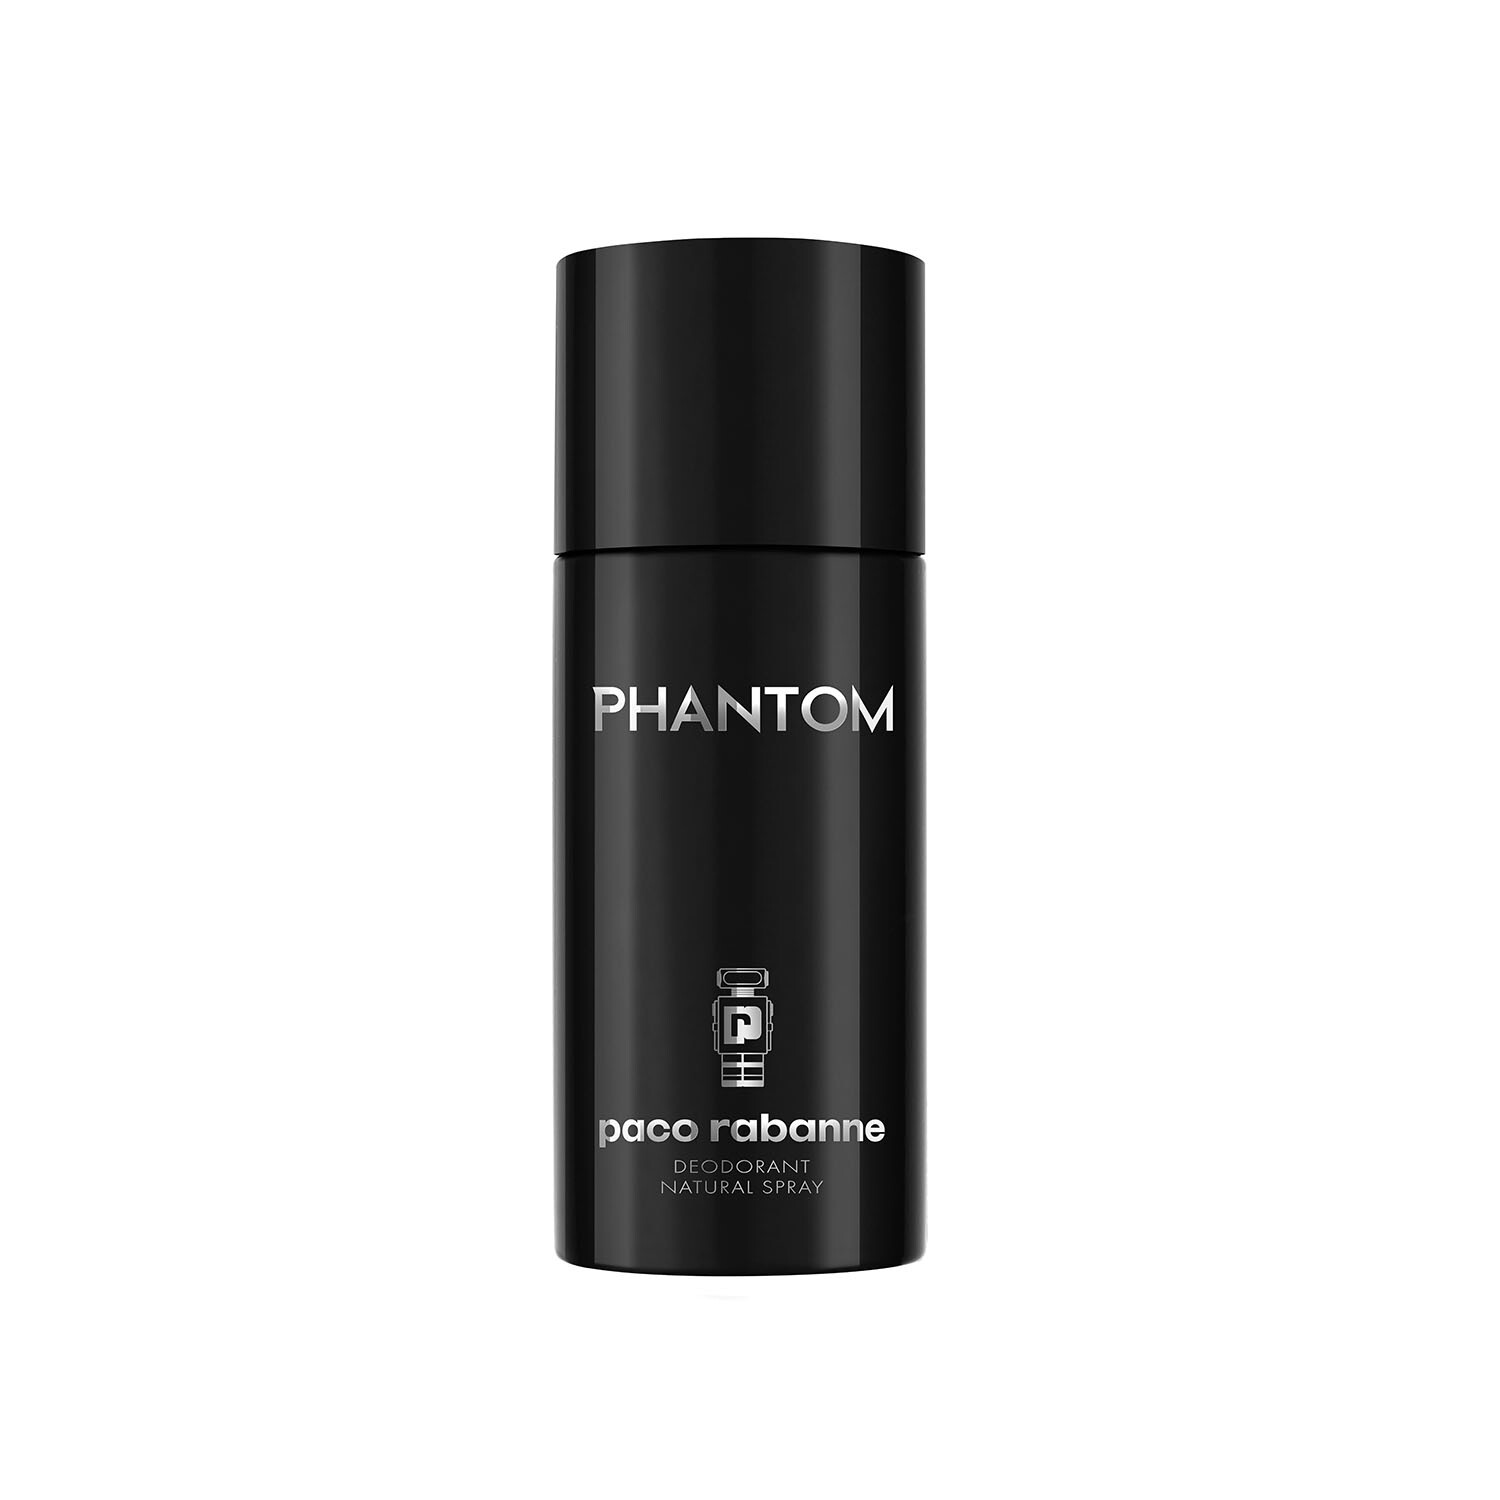 Deodorant Paco Rabanne Phantom Deodorant Spray 150ml bestellen